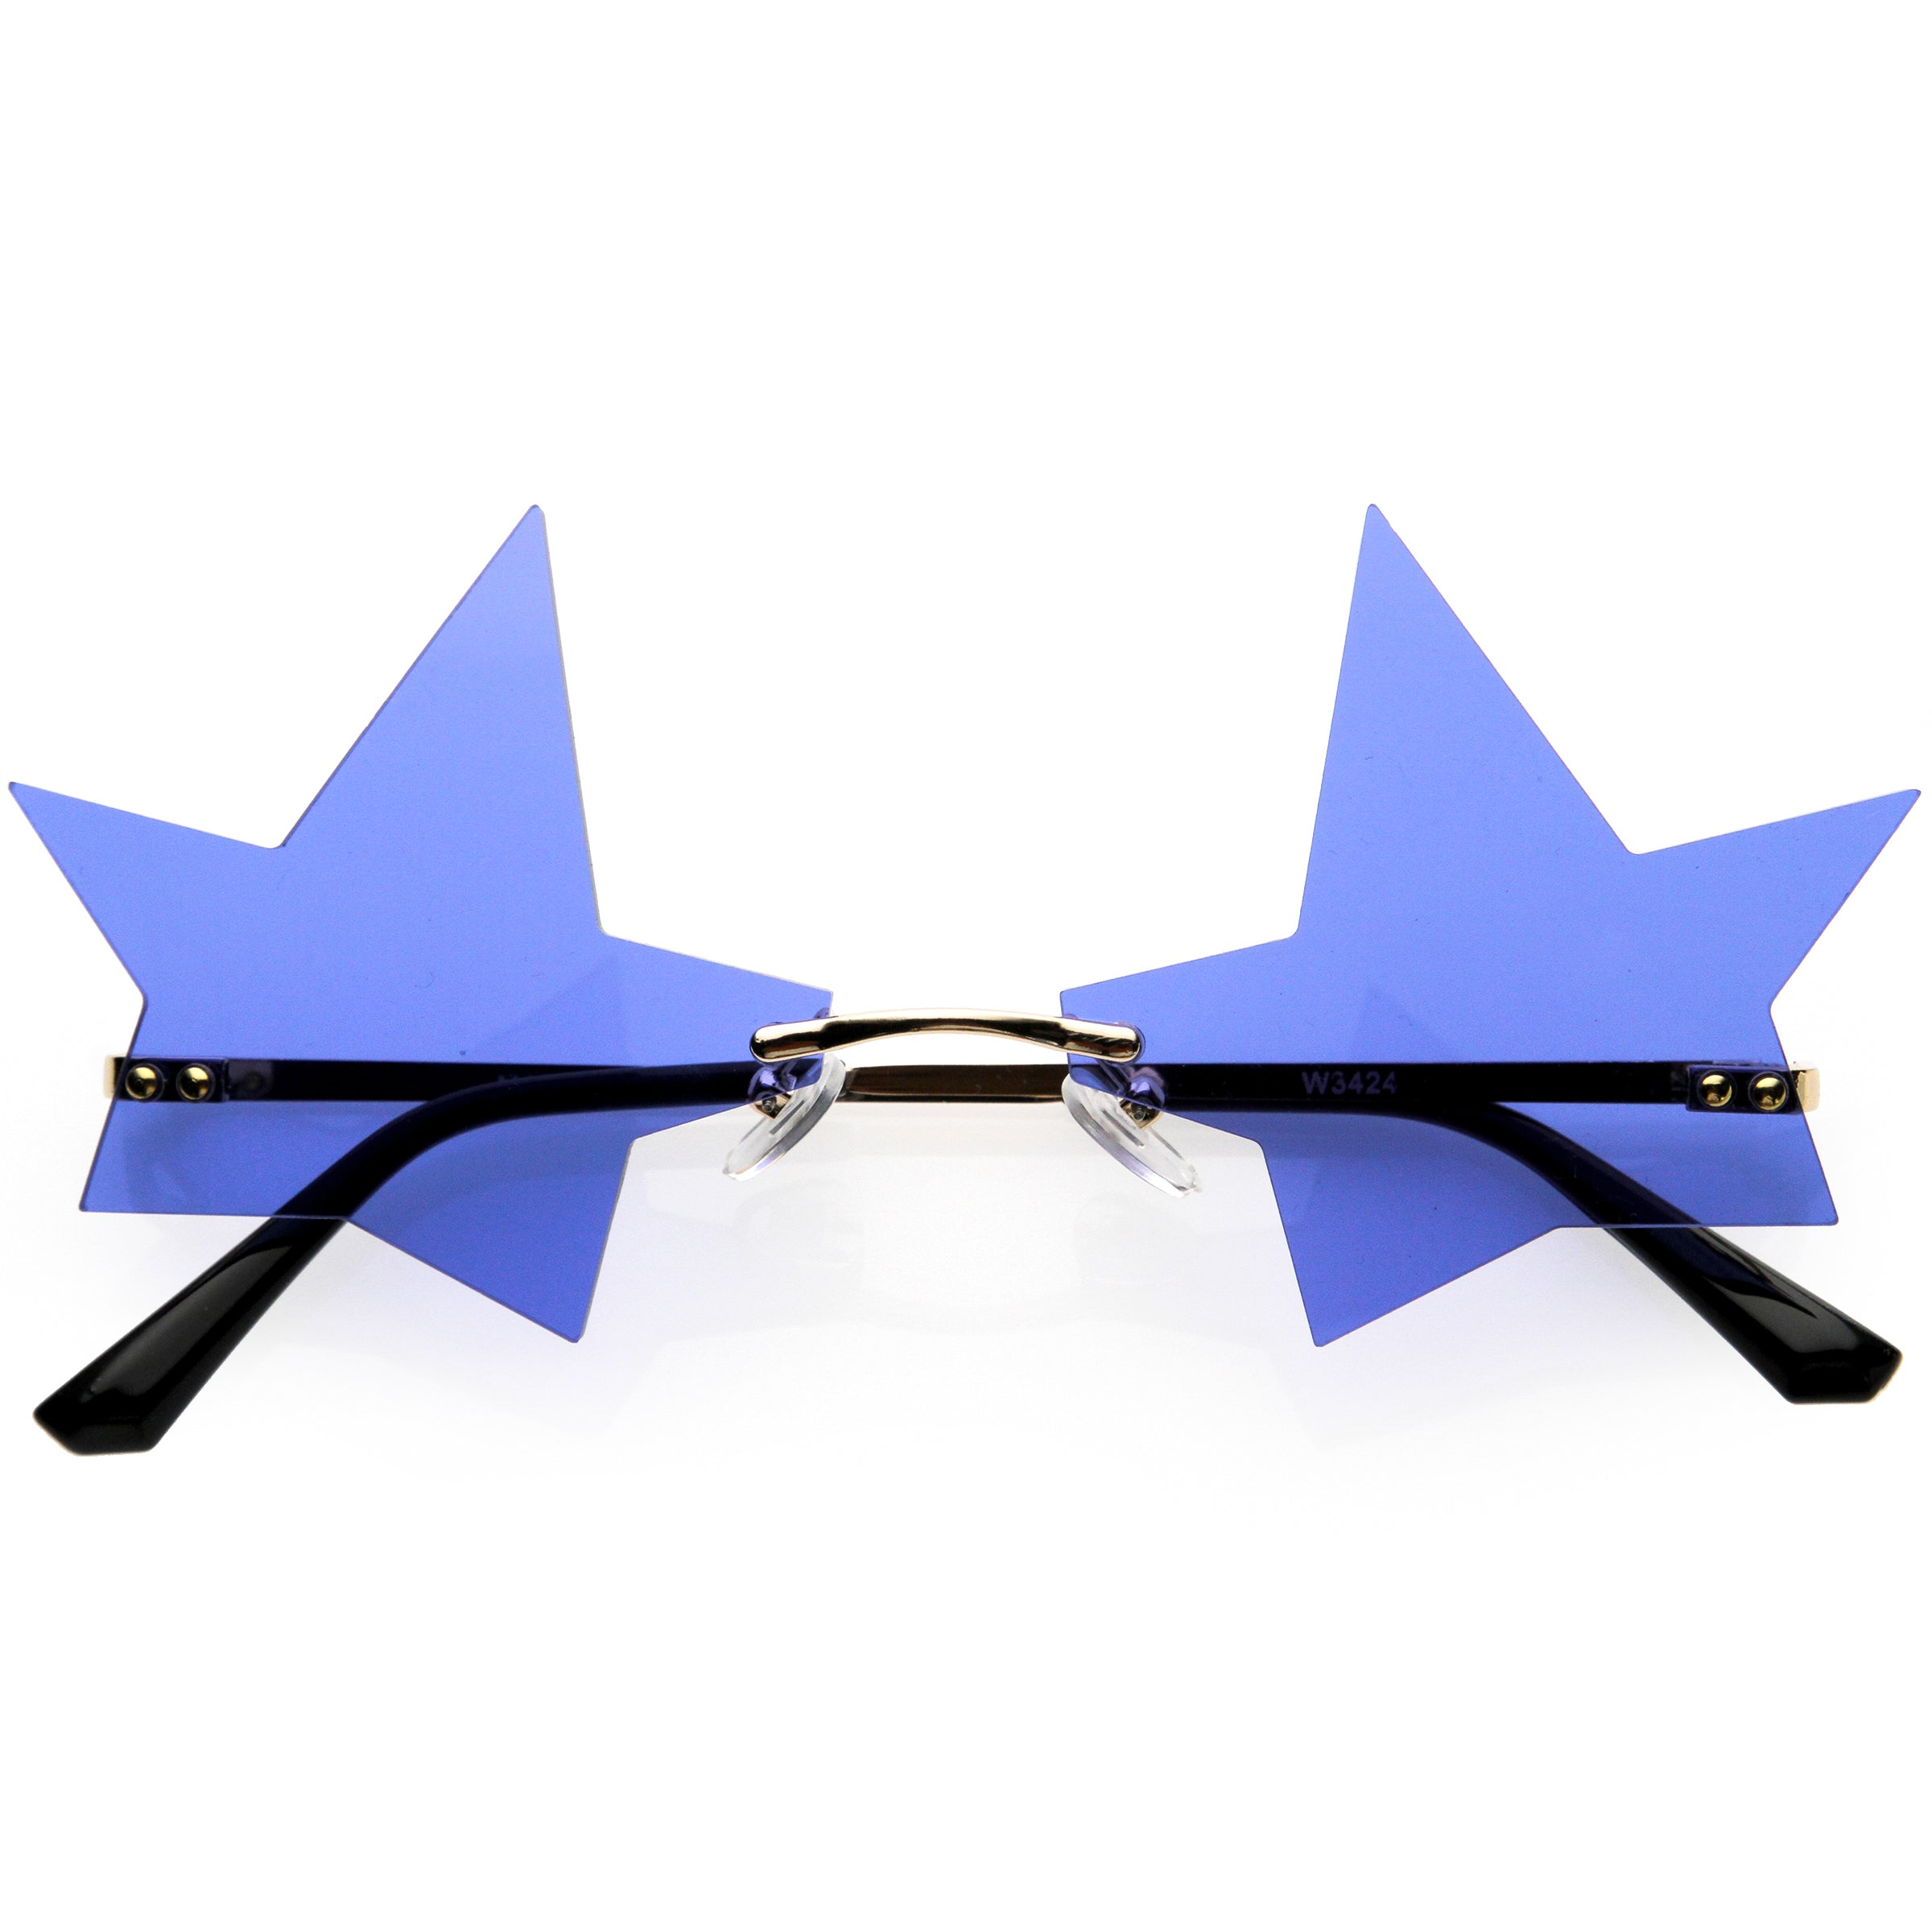 Chic Tinted Star Design Rimless Metal Frame Stars Sunglasses 56mm